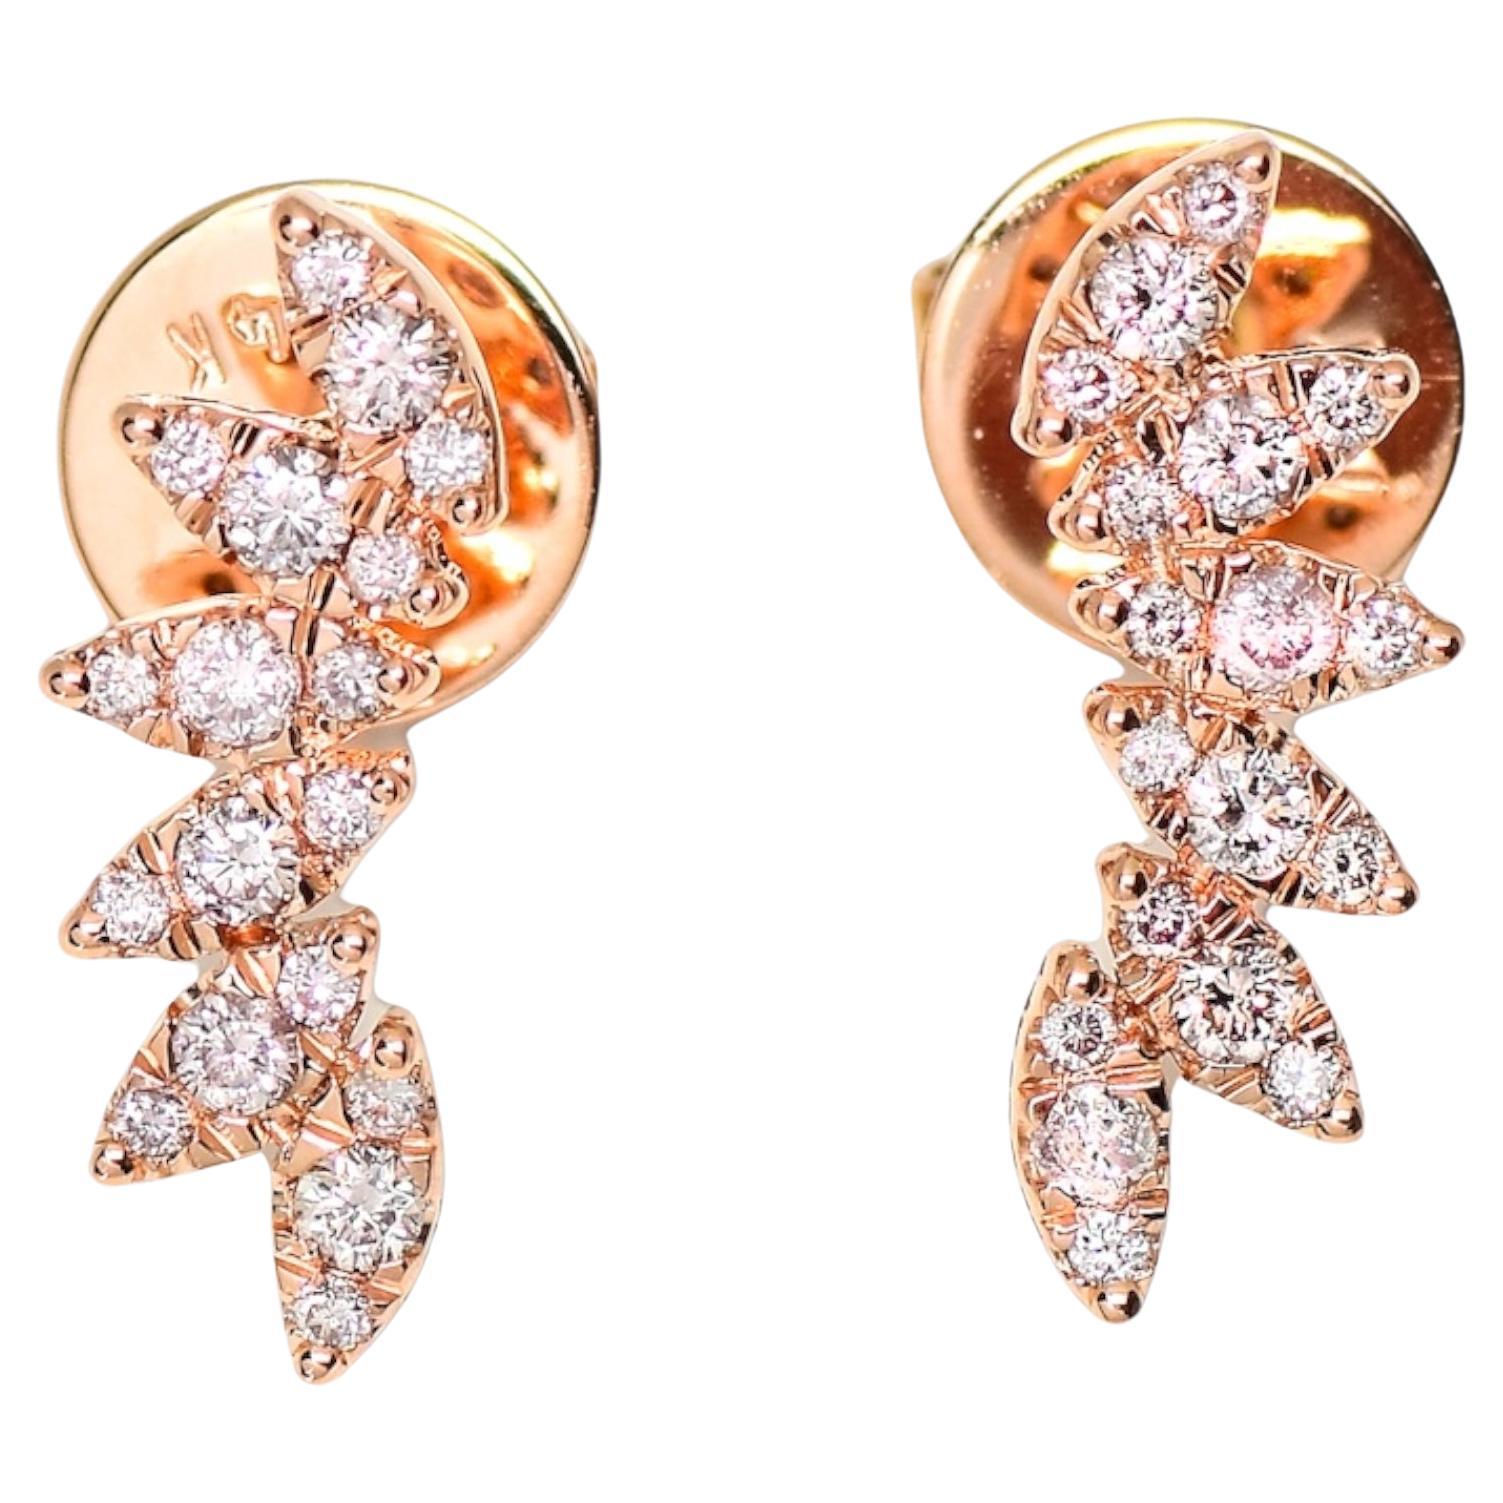 IGI 14K 0.33 ct Natural Pink Diamonds Art Deco Design Stud Earrings For Sale